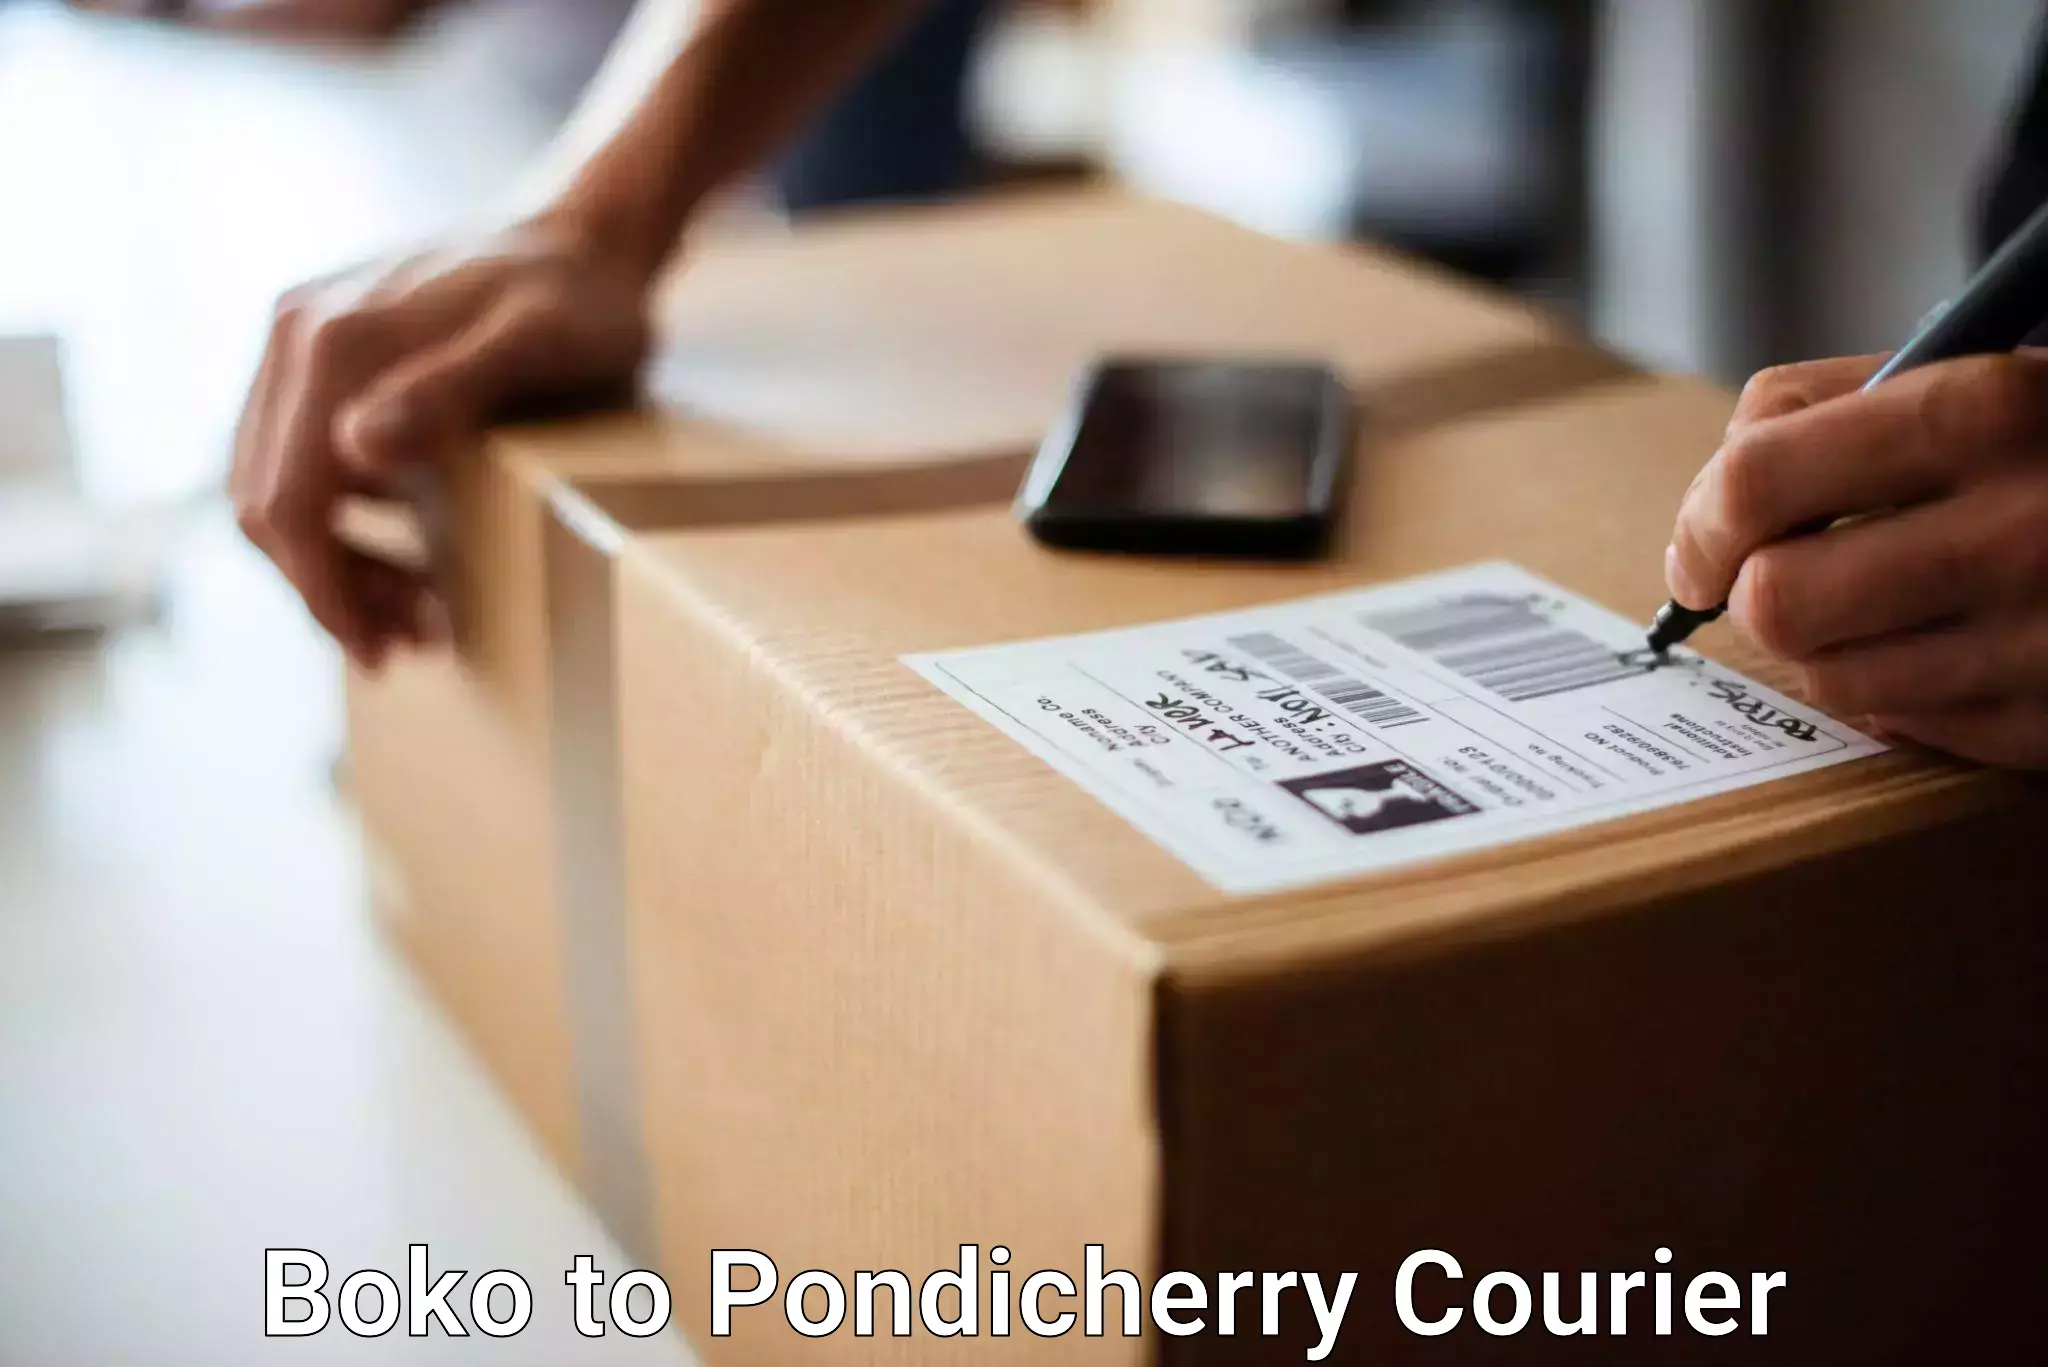 Luggage shipment specialists Boko to Pondicherry